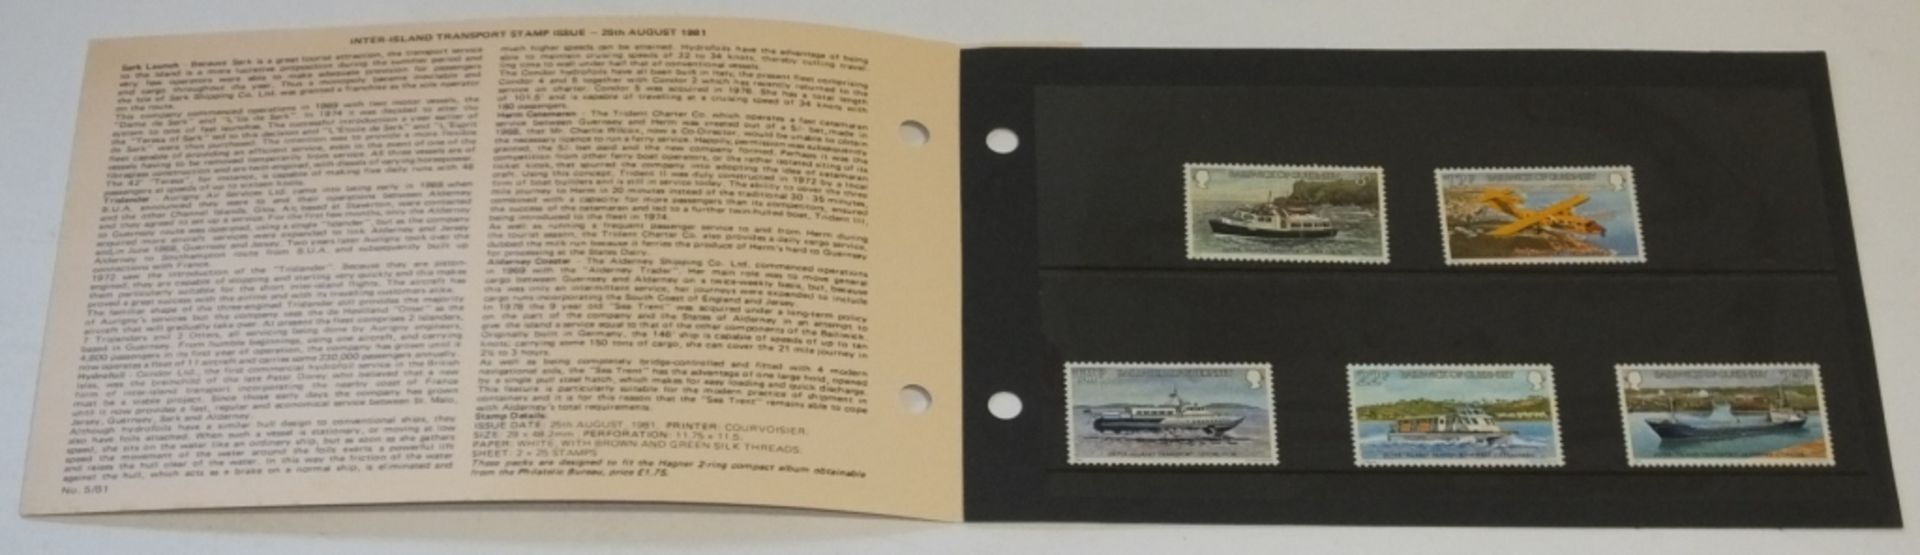 Stamp Card Sets - Jersey, Guernsey, British Gardens, Christmas, British Cars, British RIve - Image 17 of 22